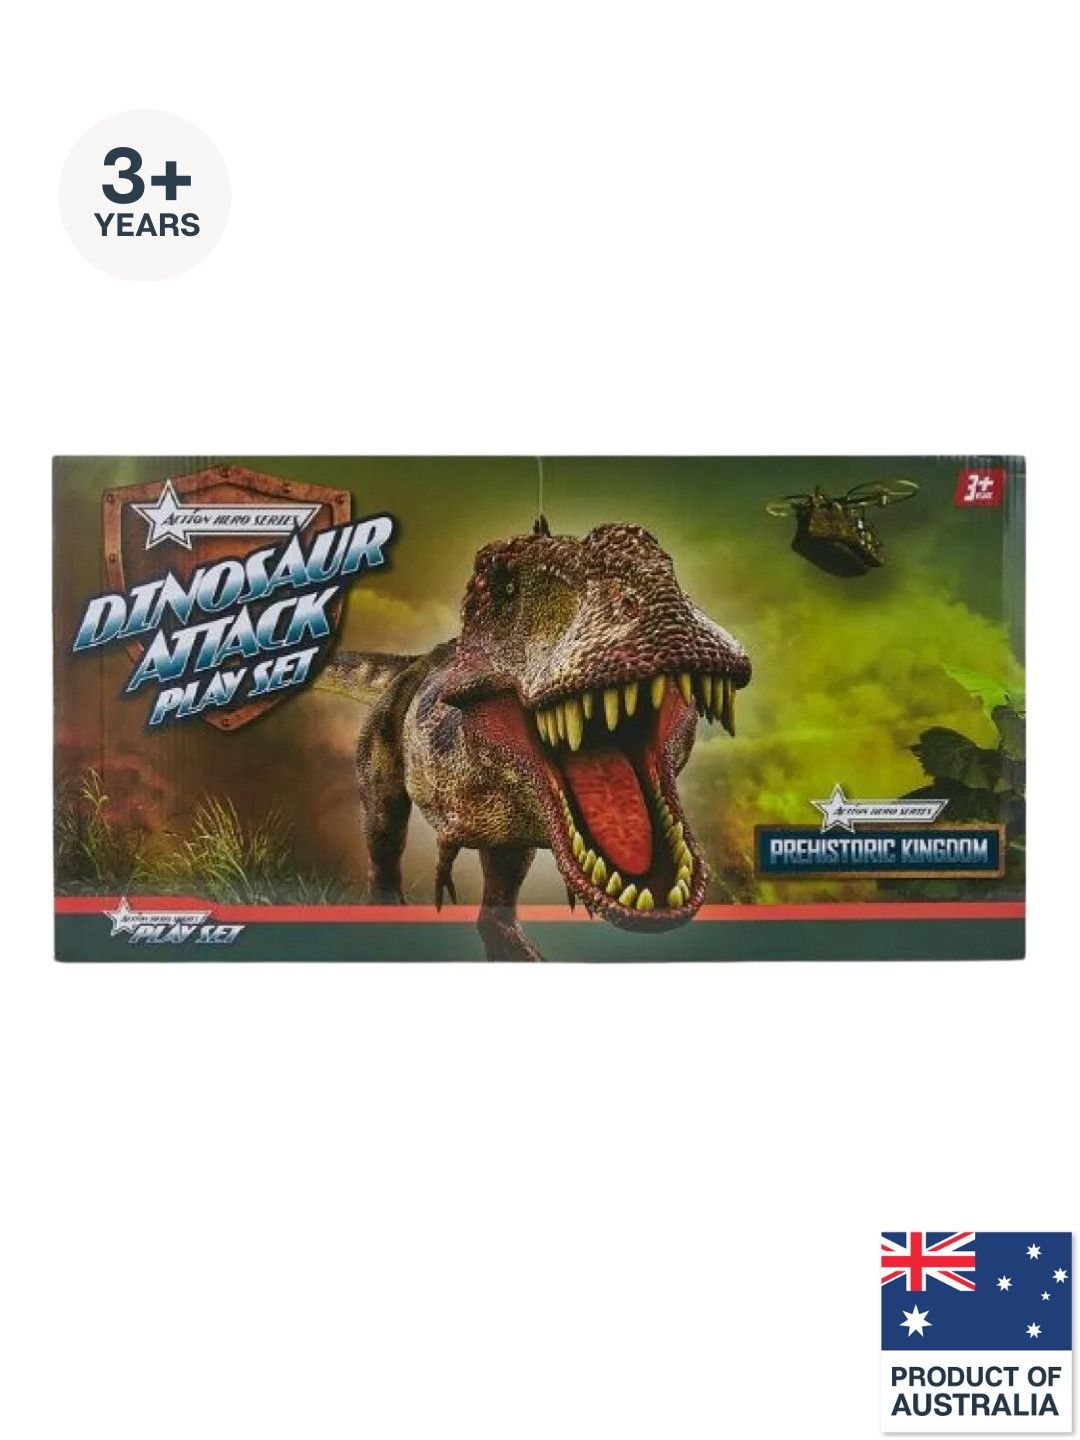 Anko Action Hero Series Dinosaur Attack Play Set